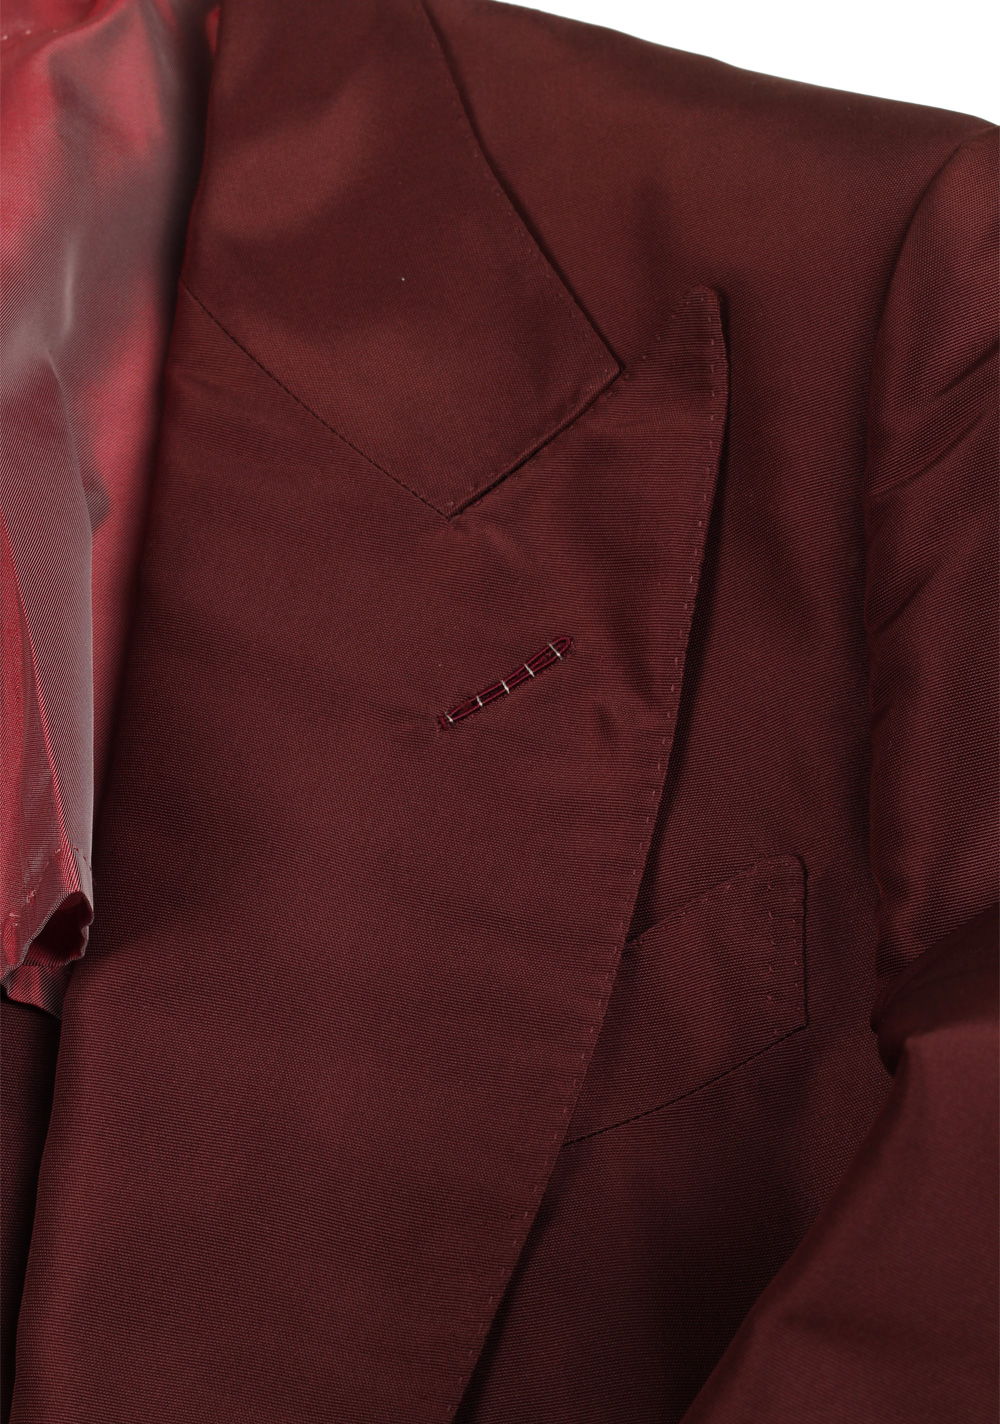 TOM FORD Atticus Burgundy Silk Suit Size 46 / 36R U.S. | Costume Limité